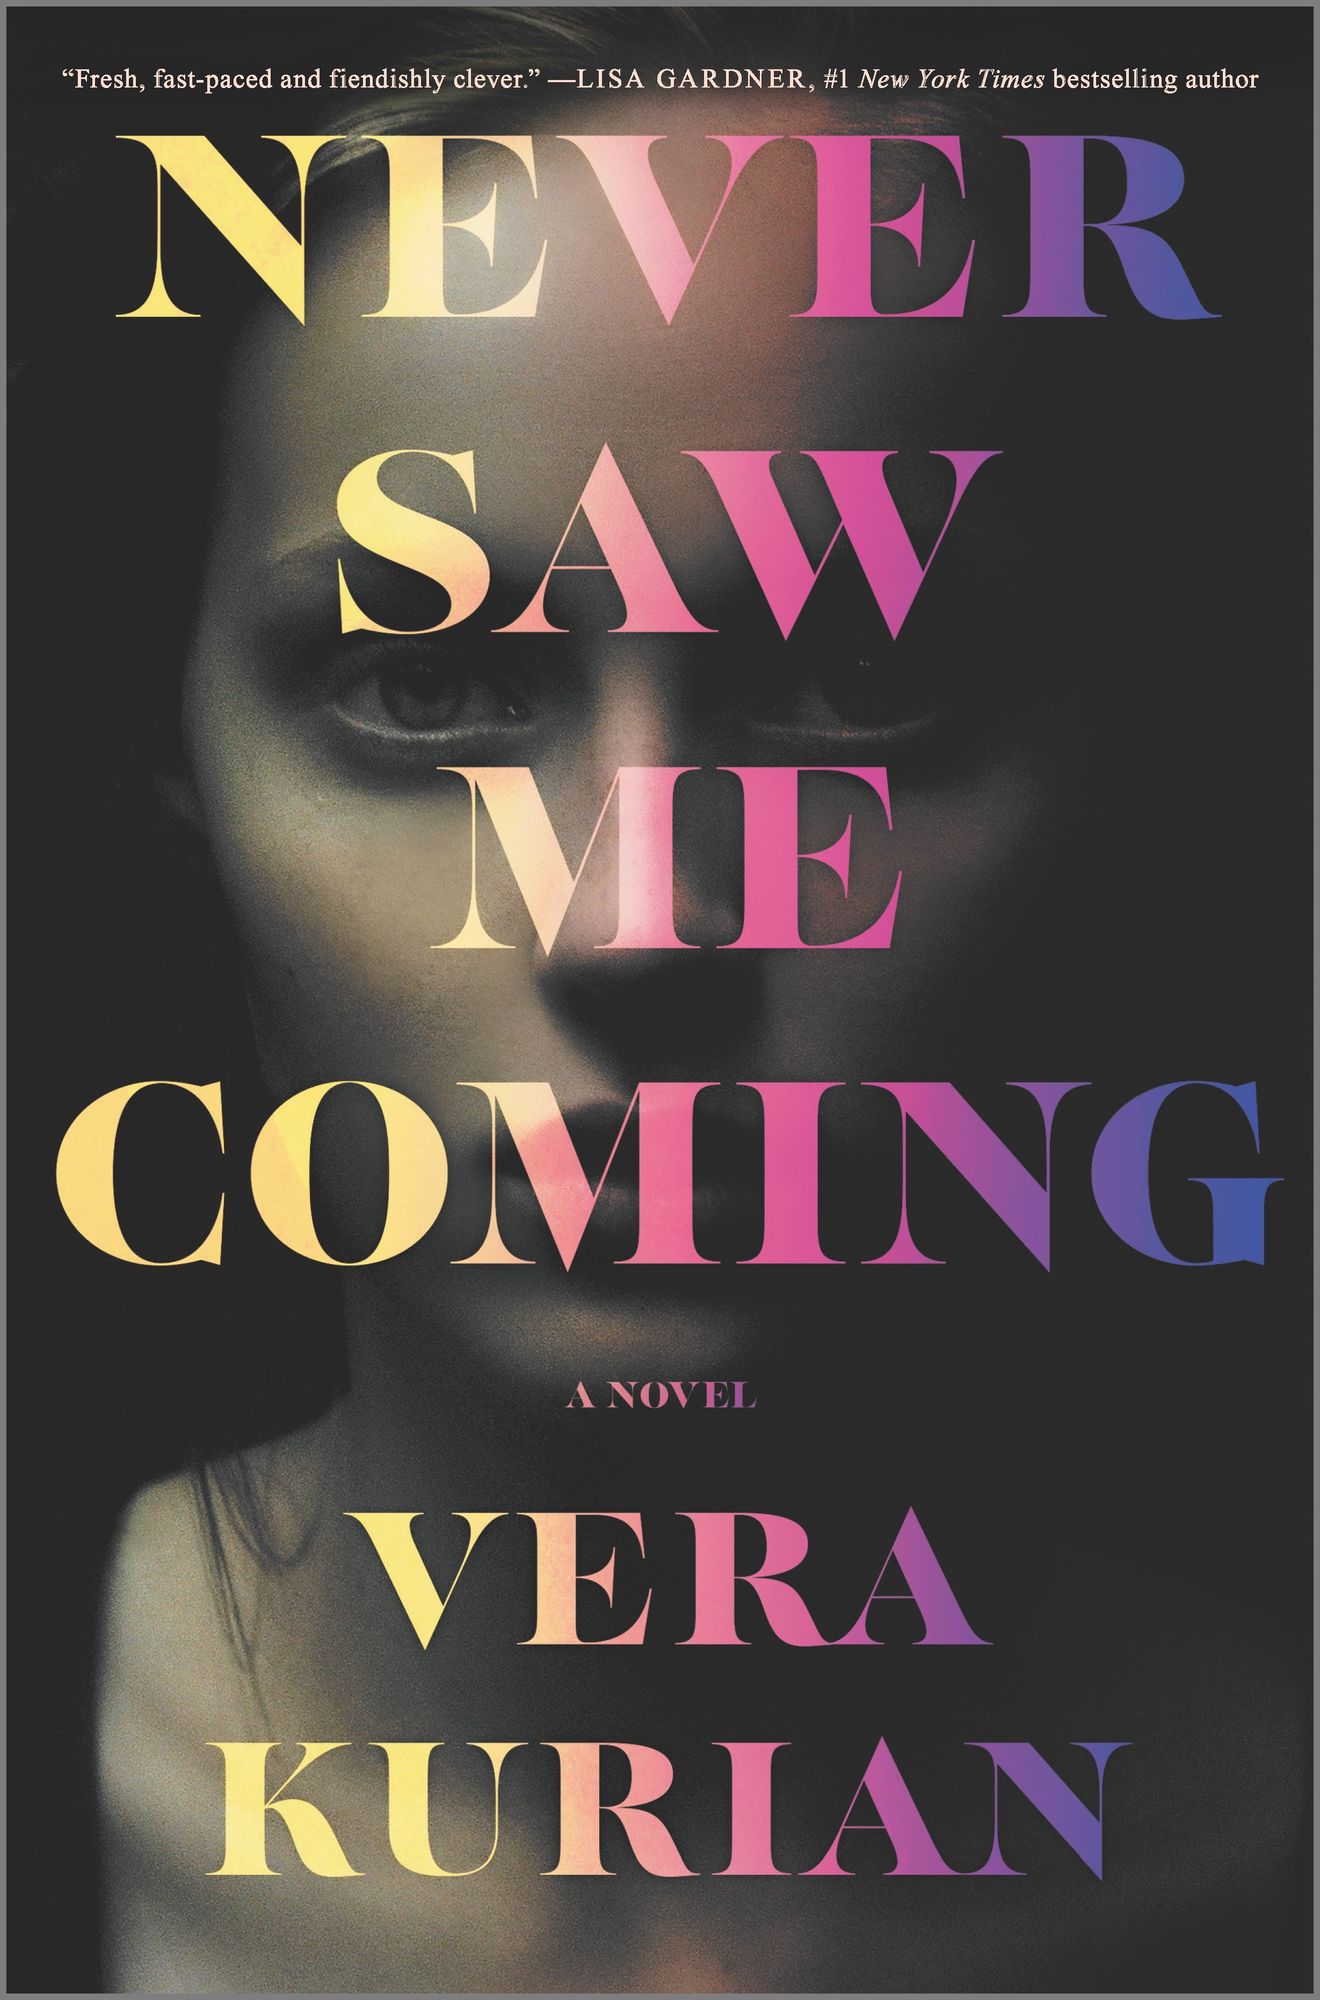 Never Saw Me Coming by Vera Kurian